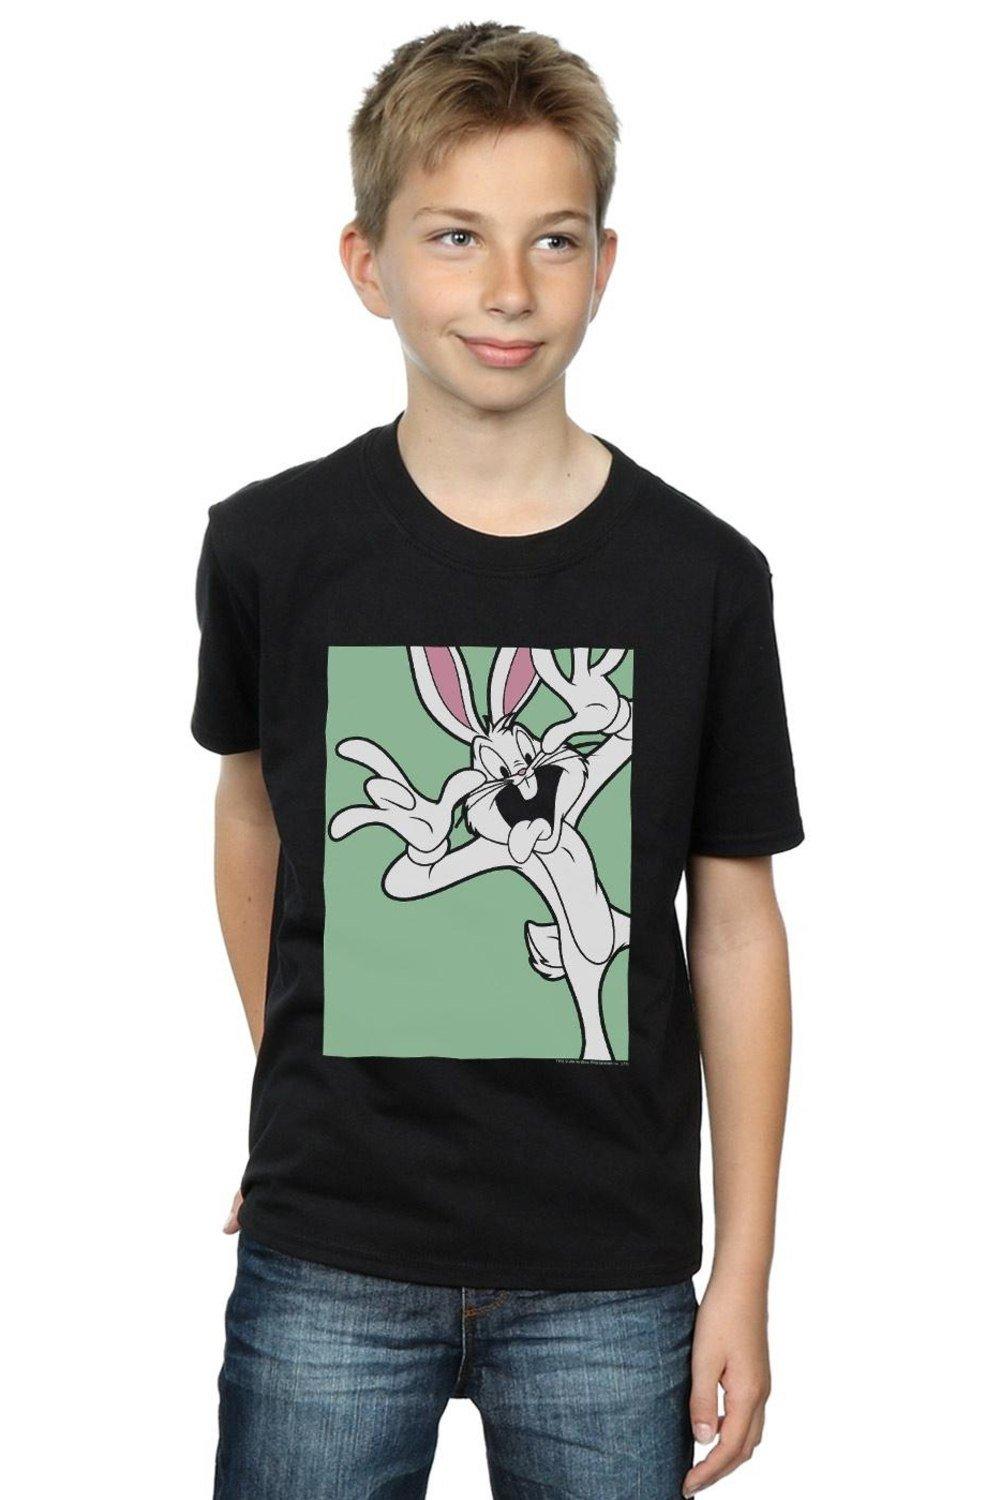 Bugs Bunny Funny Face T-Shirt